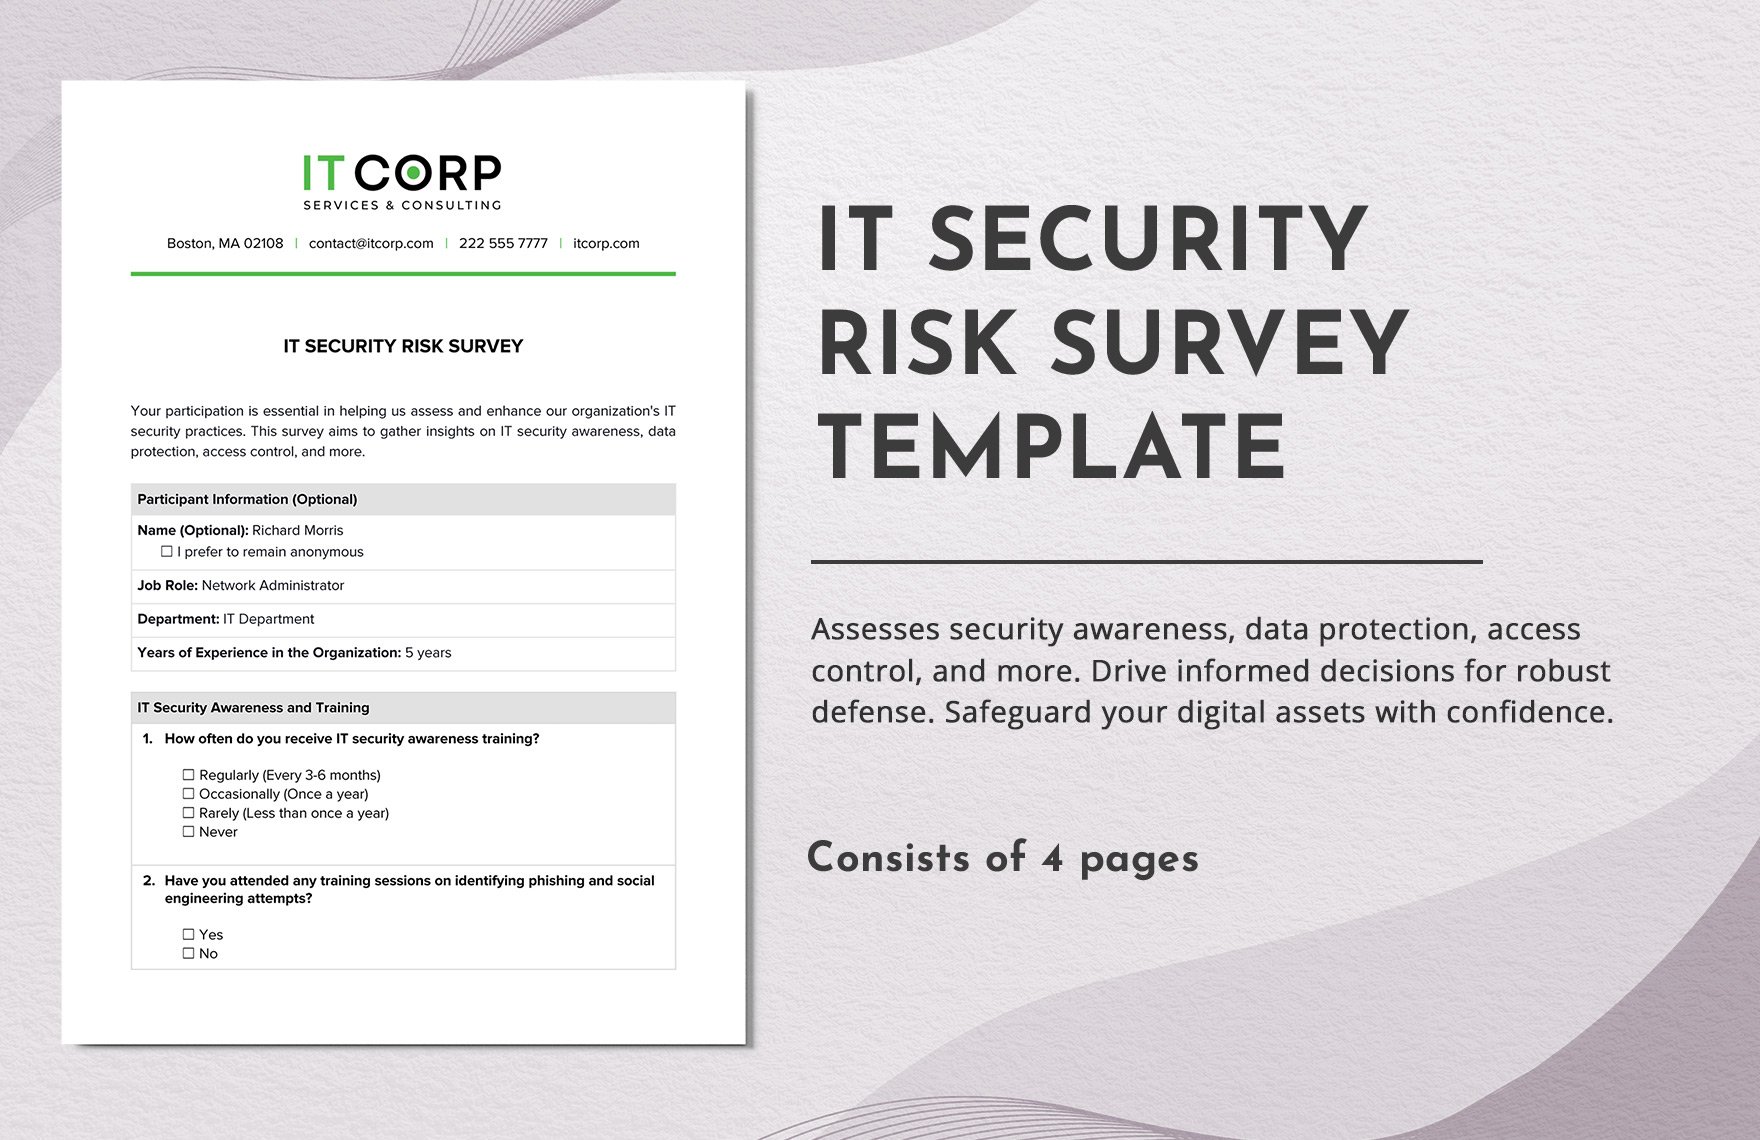 IT Security Risk Survey Template